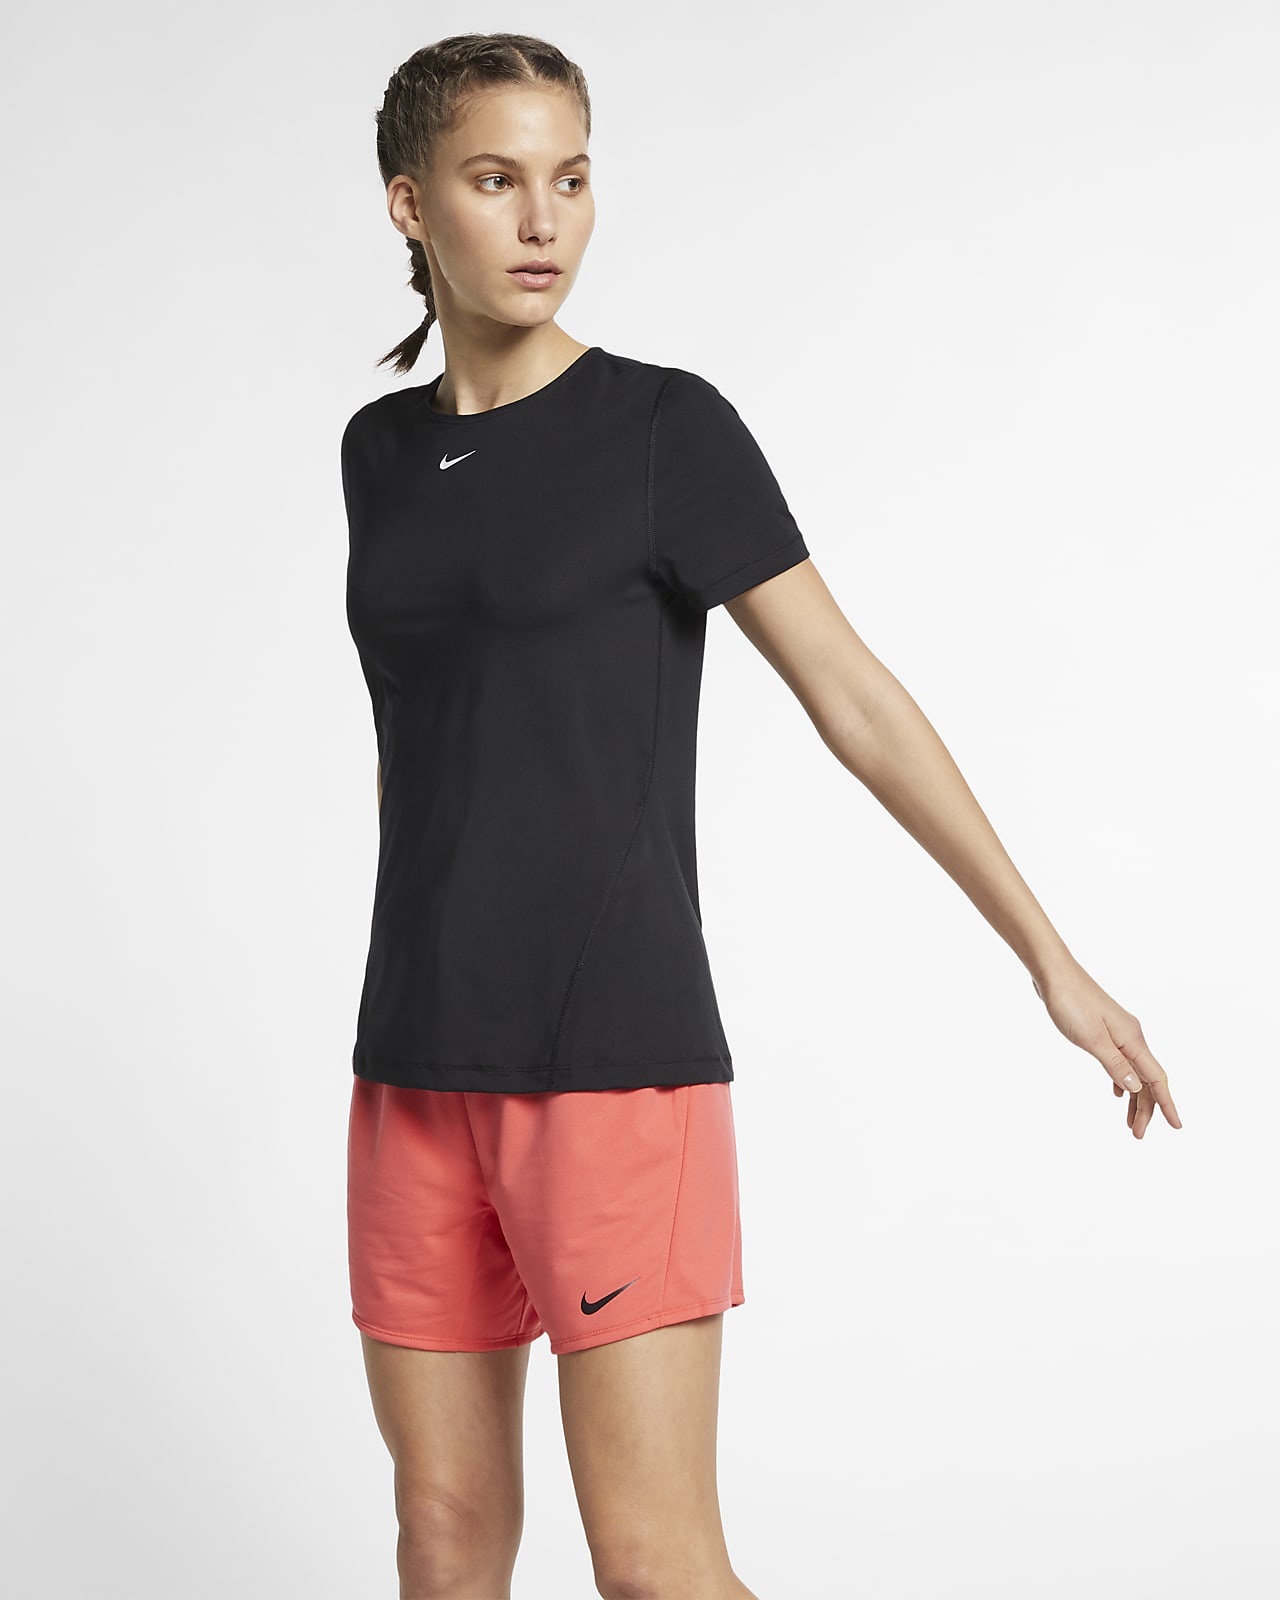 Nike Pro Women's Short-Sleeve Training Top.